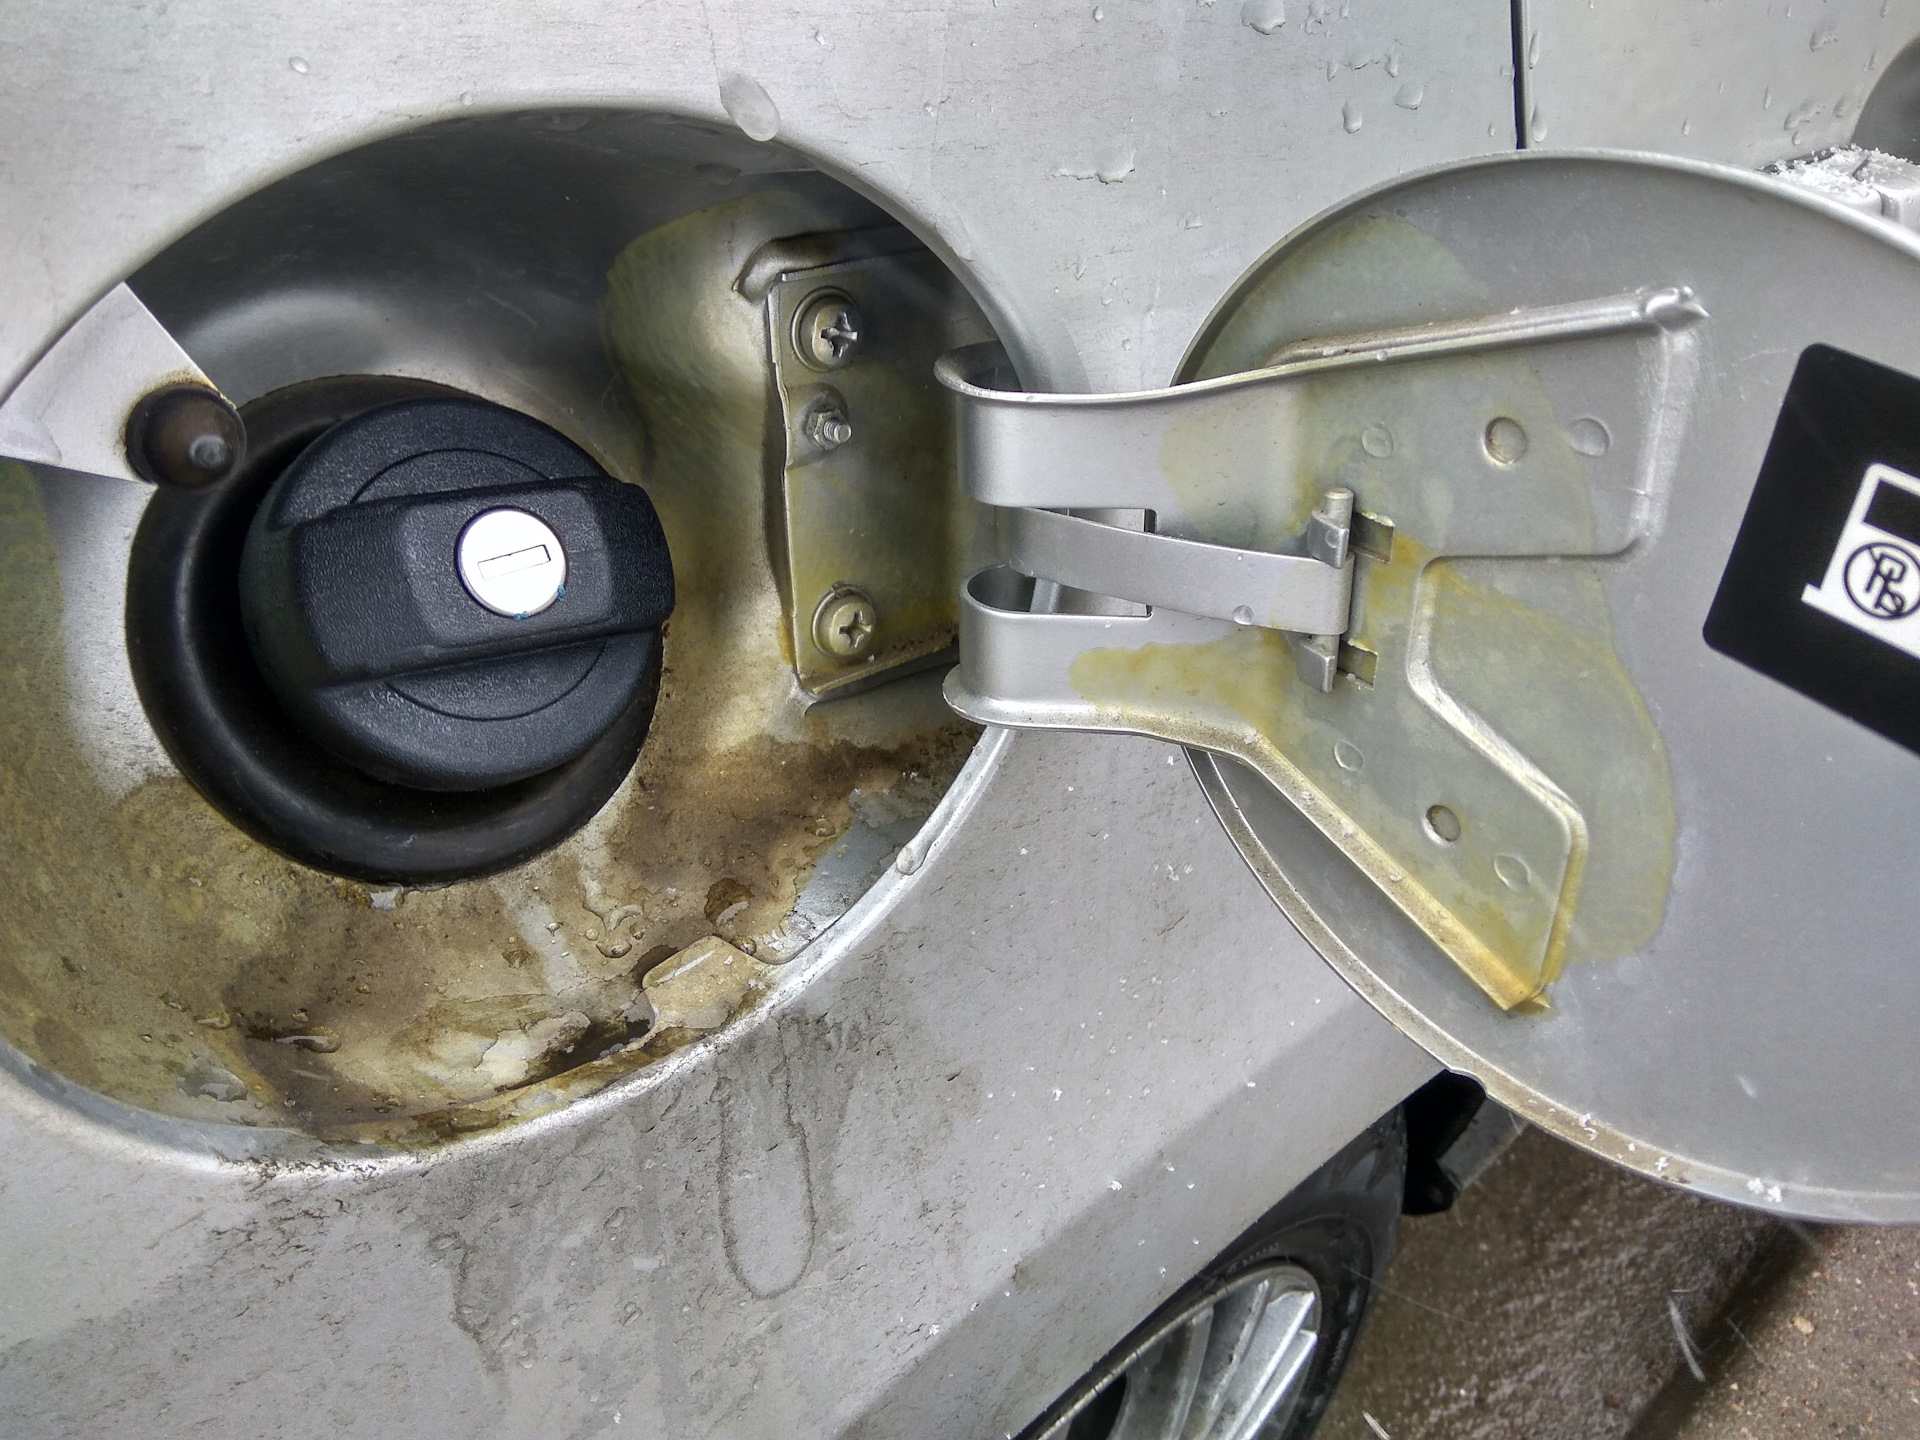 Крышка бензин бак. Лючок газового заправочного крана УАЗ 452. ВИС 2190 пробка бензобака.